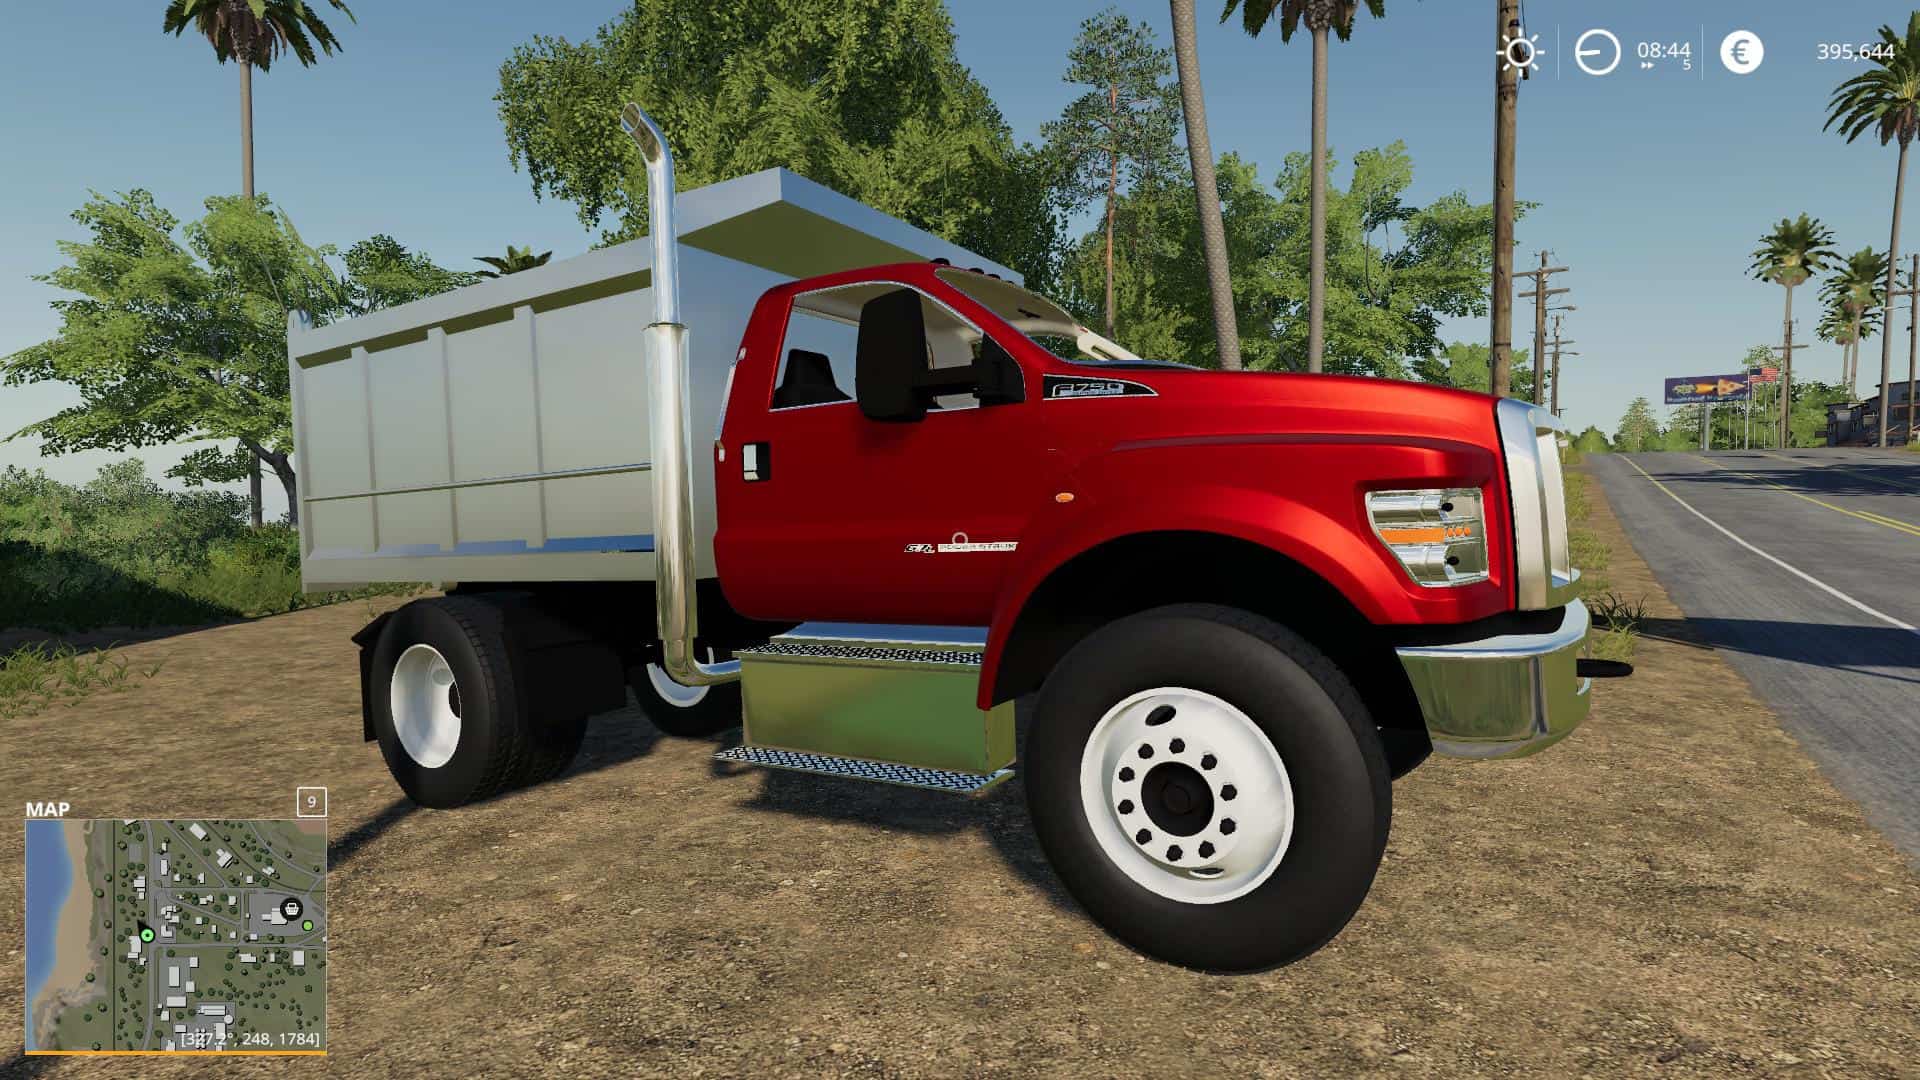 F750 Dump Truck v1.0.0.0 Mod - Farming Simulator 19 Mod / FS19